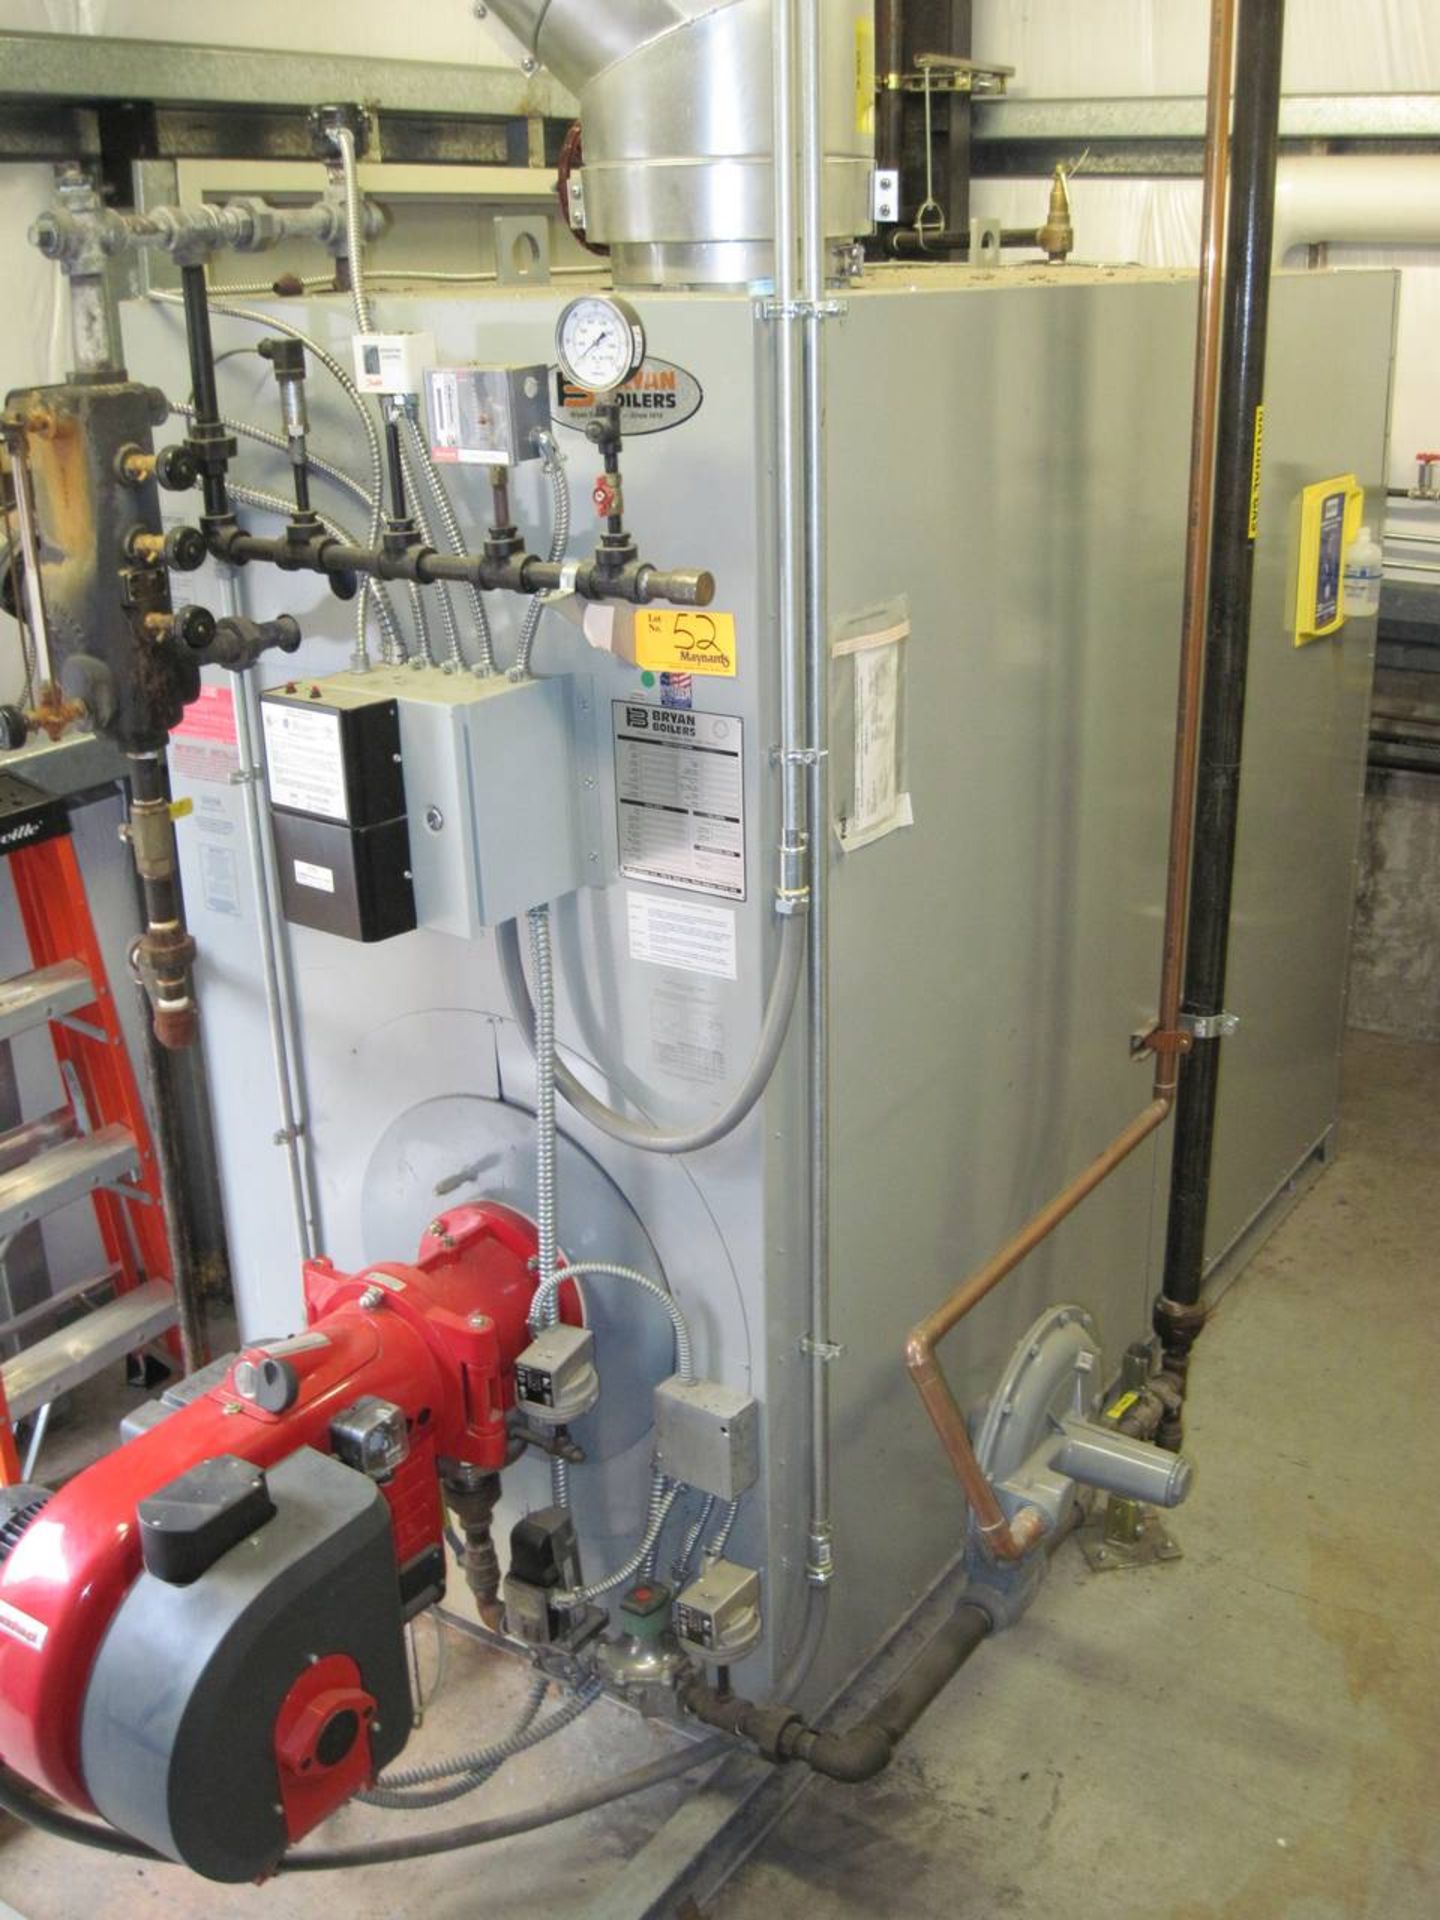 2007 Bryan Boiler Mdl: AB250-S-150-FD  Boiler, 60Hp, 100psi w/ Pump Skid & Condensate Return System, - Image 2 of 2